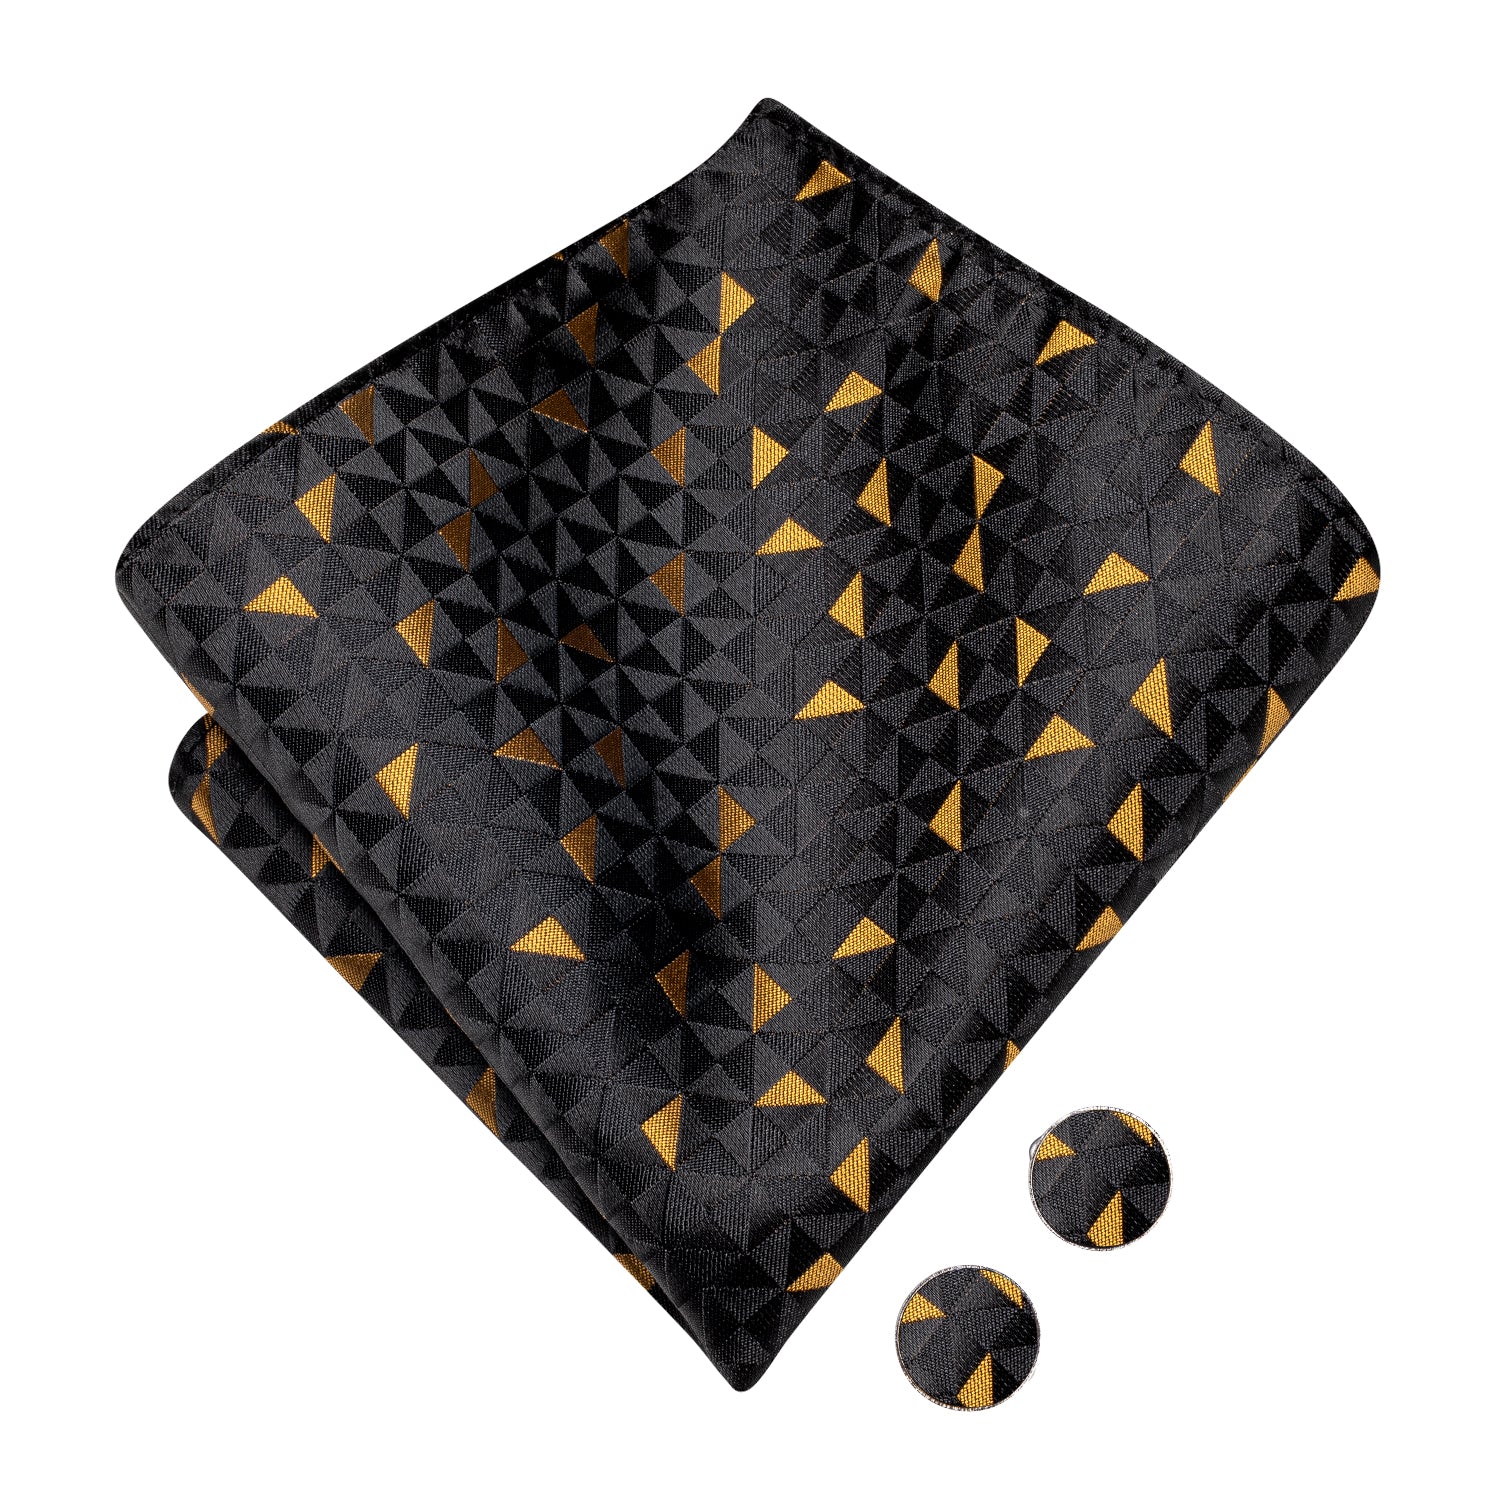 Black Golden Novelty Plaid Silk Pre-tied Bow Tie Hanky Cufflinks Set